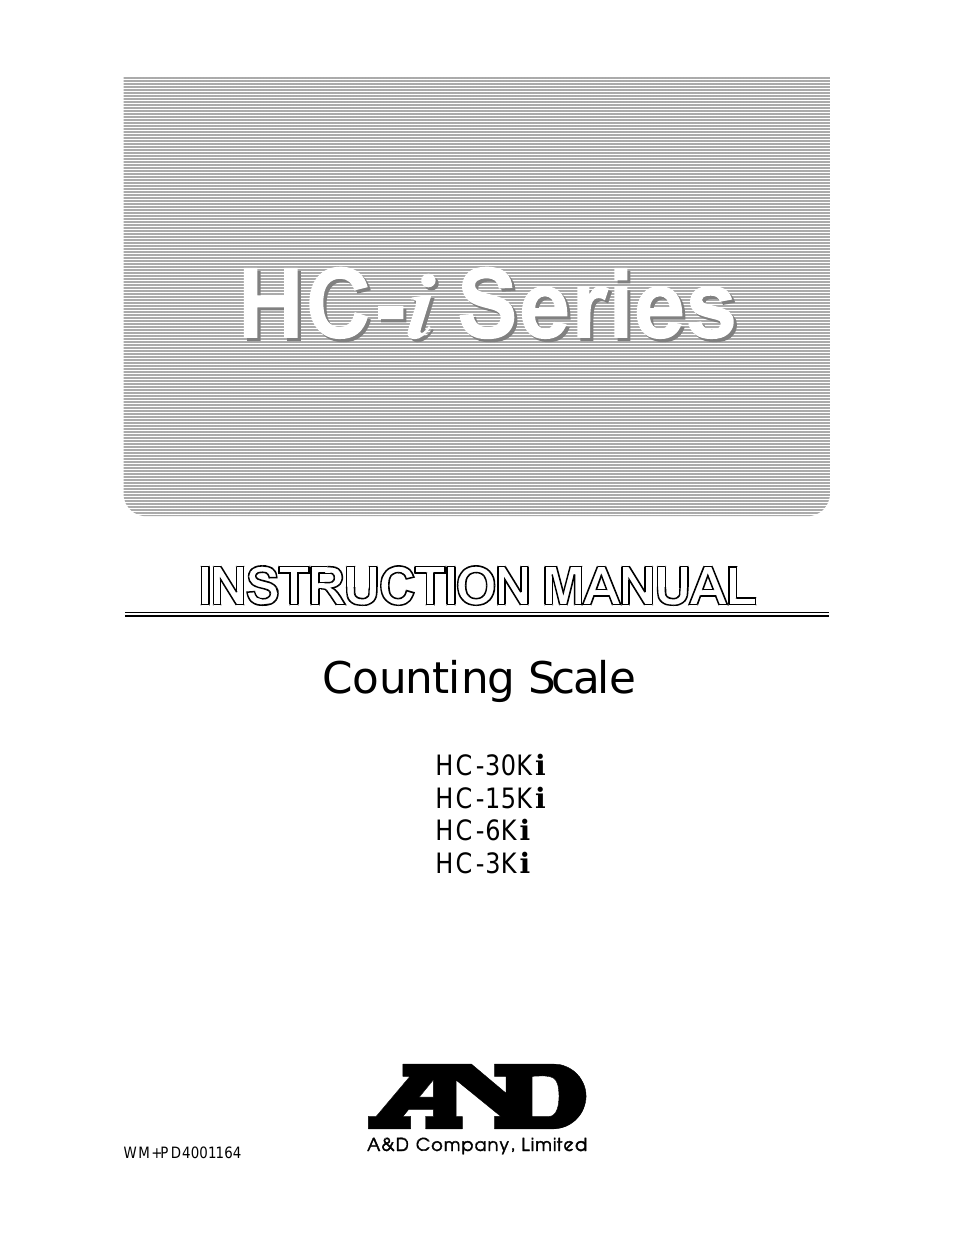 Counting Scale HC-3Ki